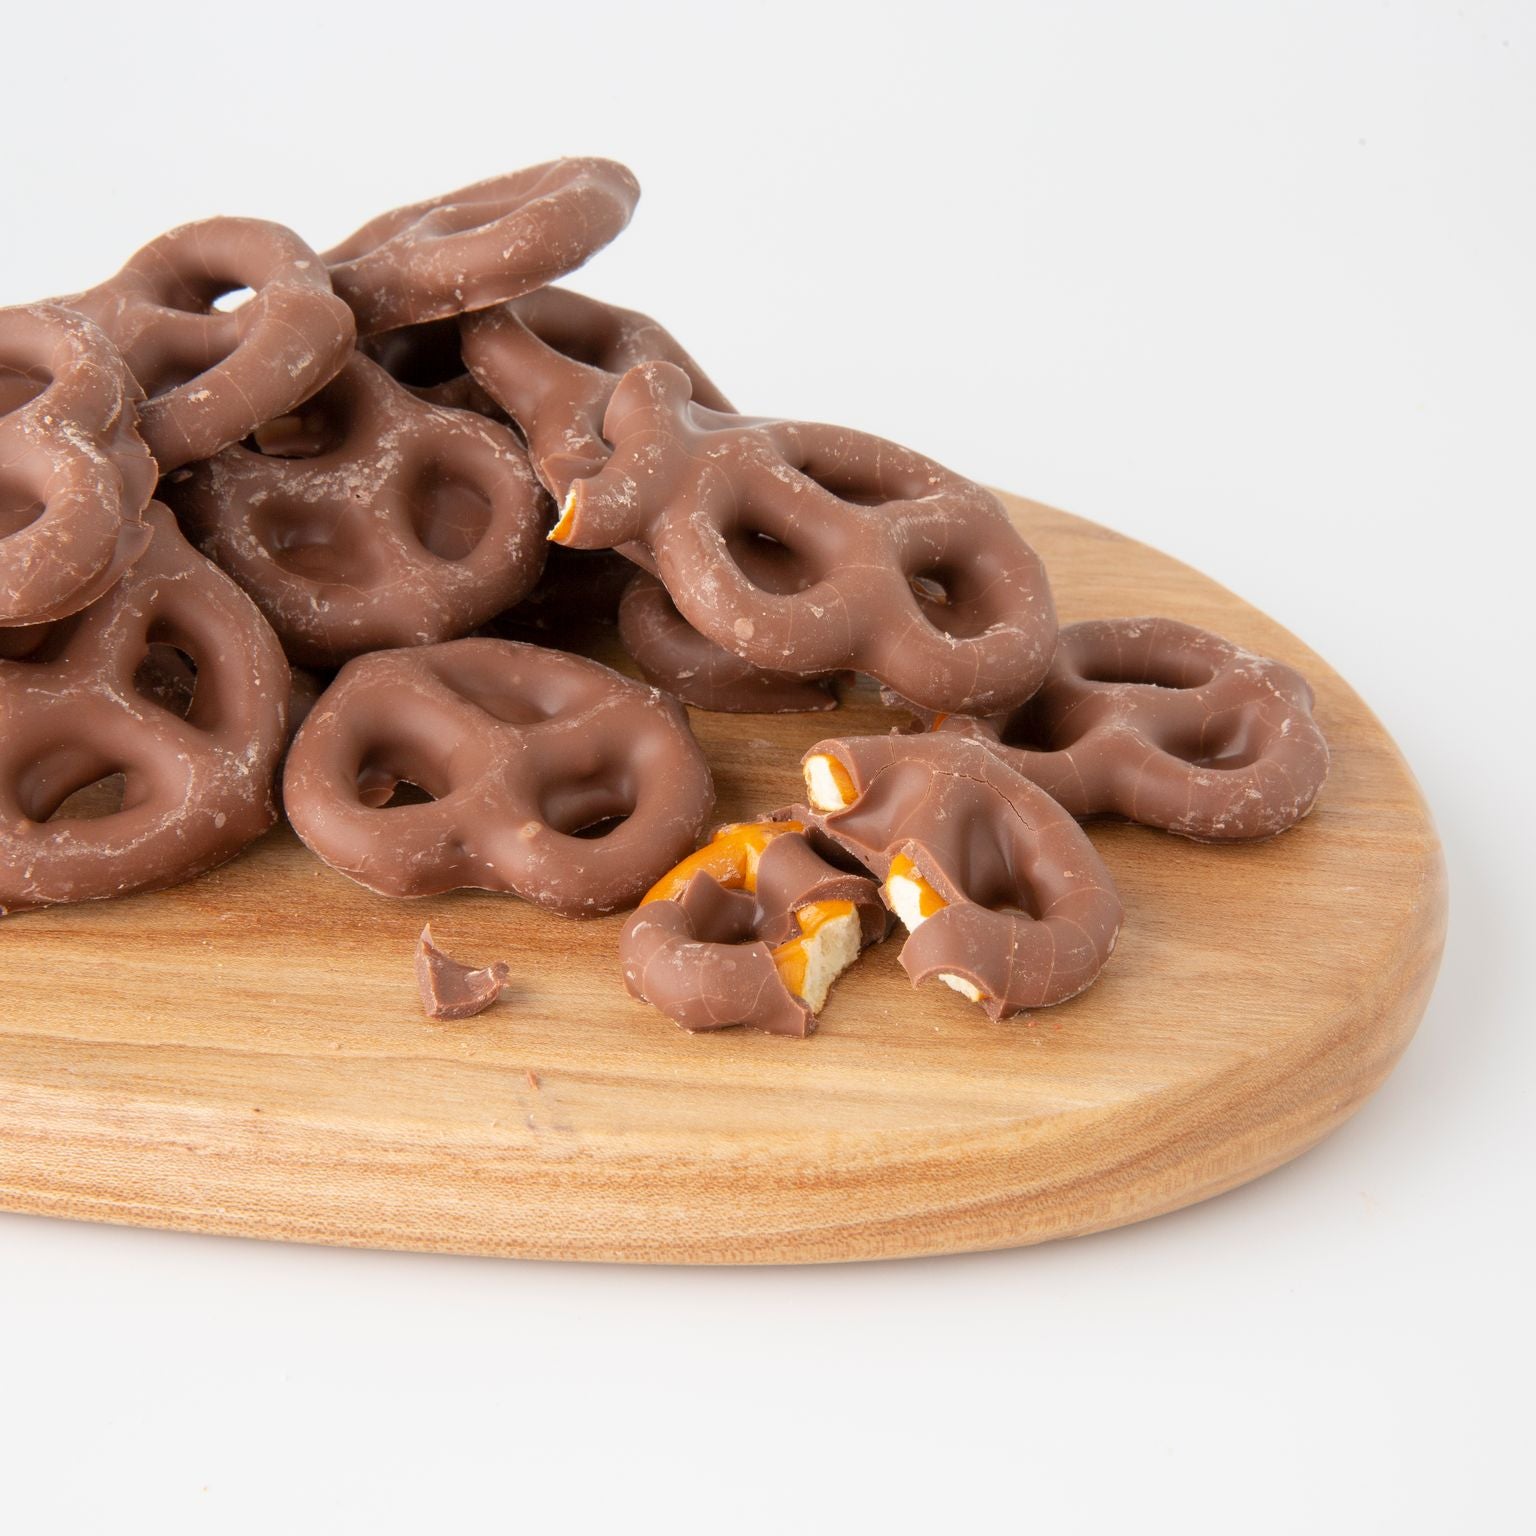 Milk Chocolate Pretzels (Snacks) Image 1 - Naked Foods